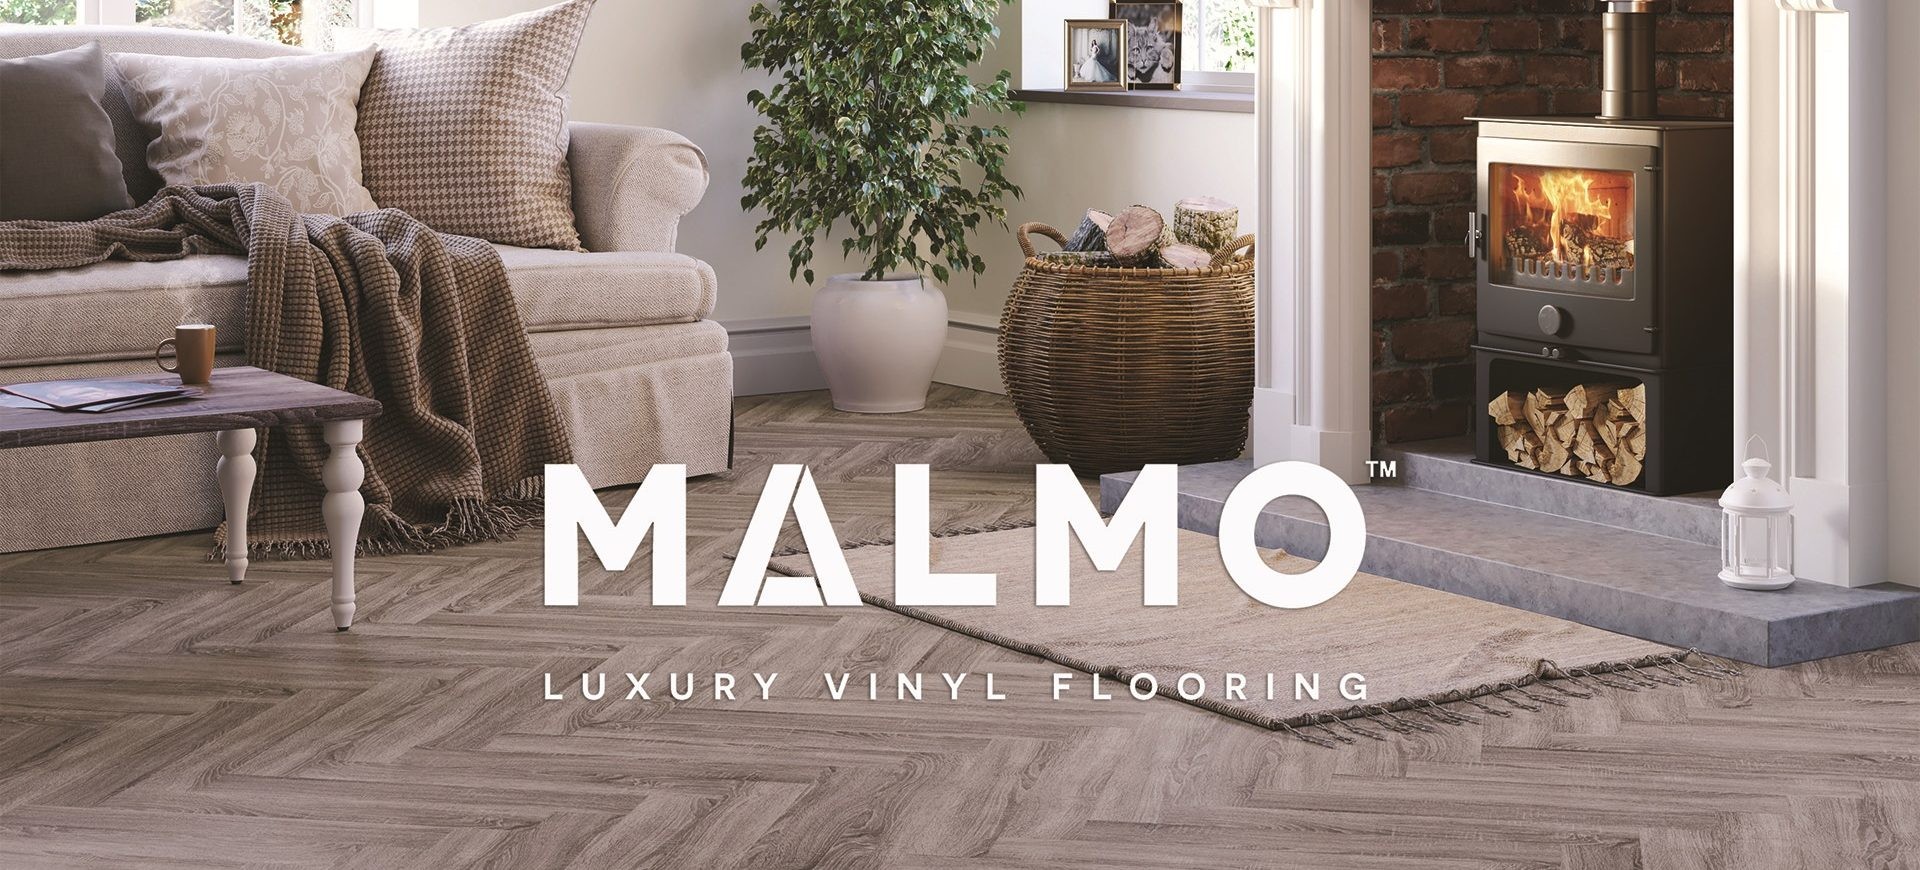 Malmo Luxury Vinyl Flooring